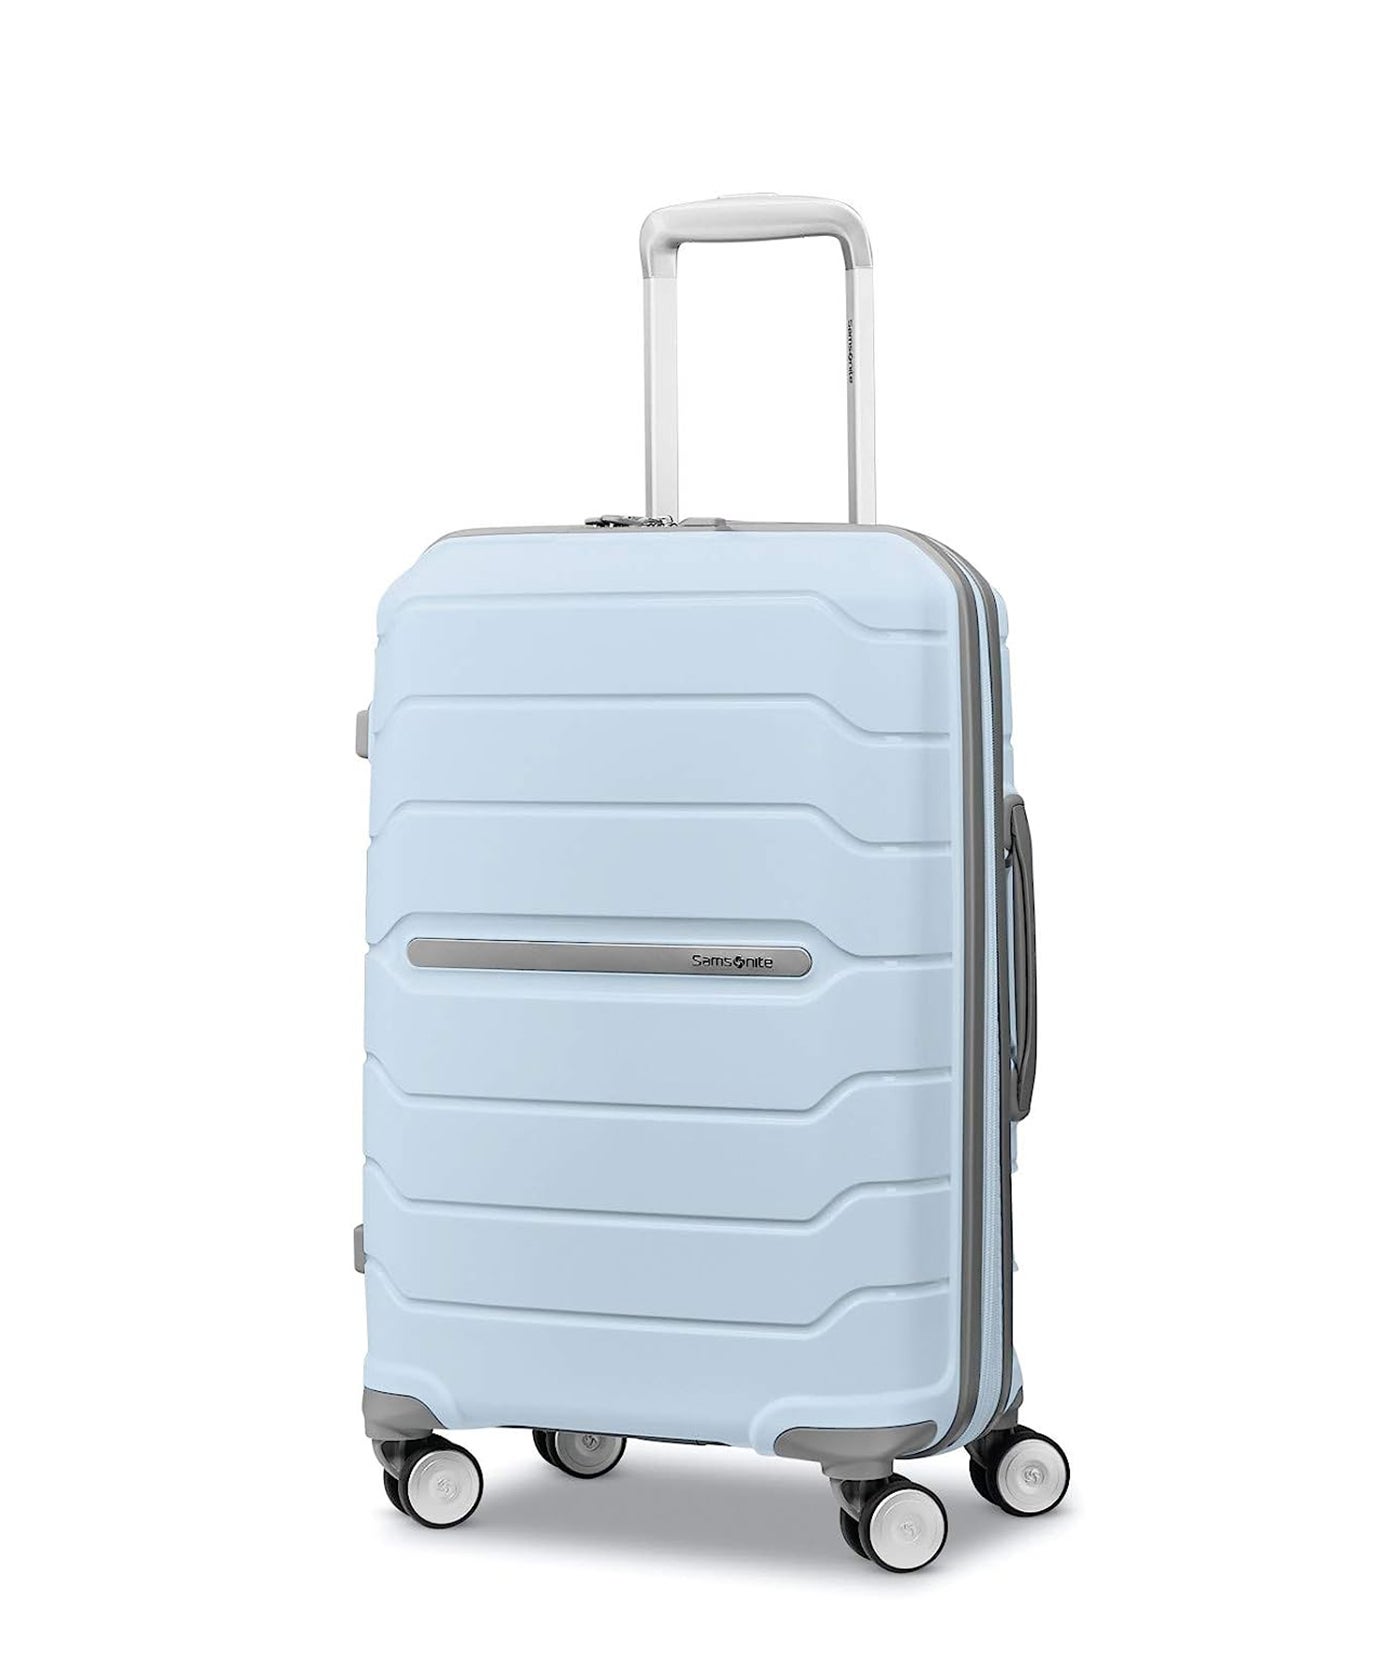 Samsonite + Freeform Hardside Carry-On Suitcase